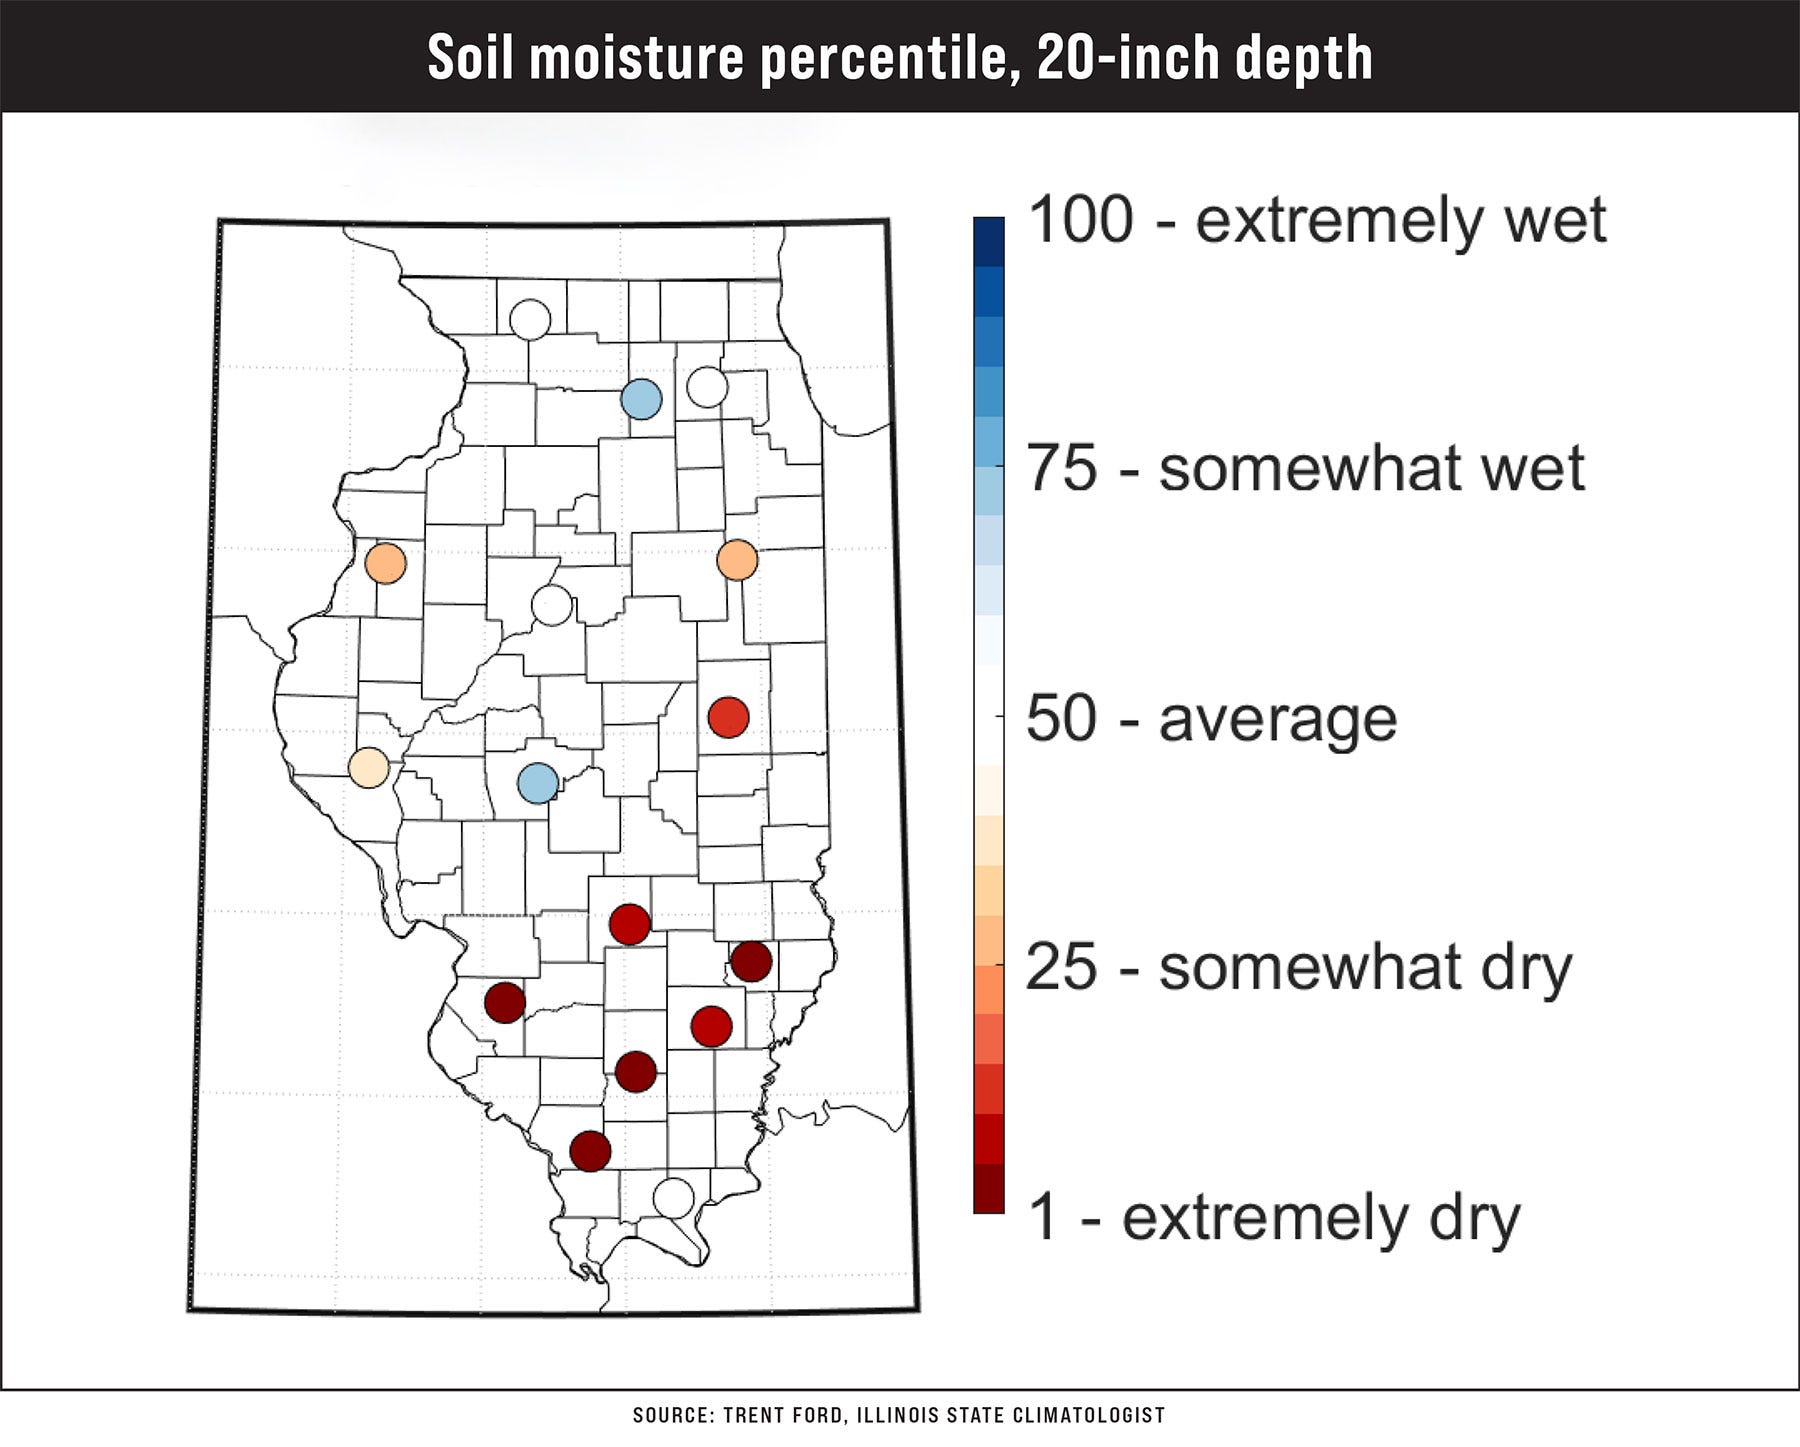 A map illustrating soil moisture percentile in Illinois